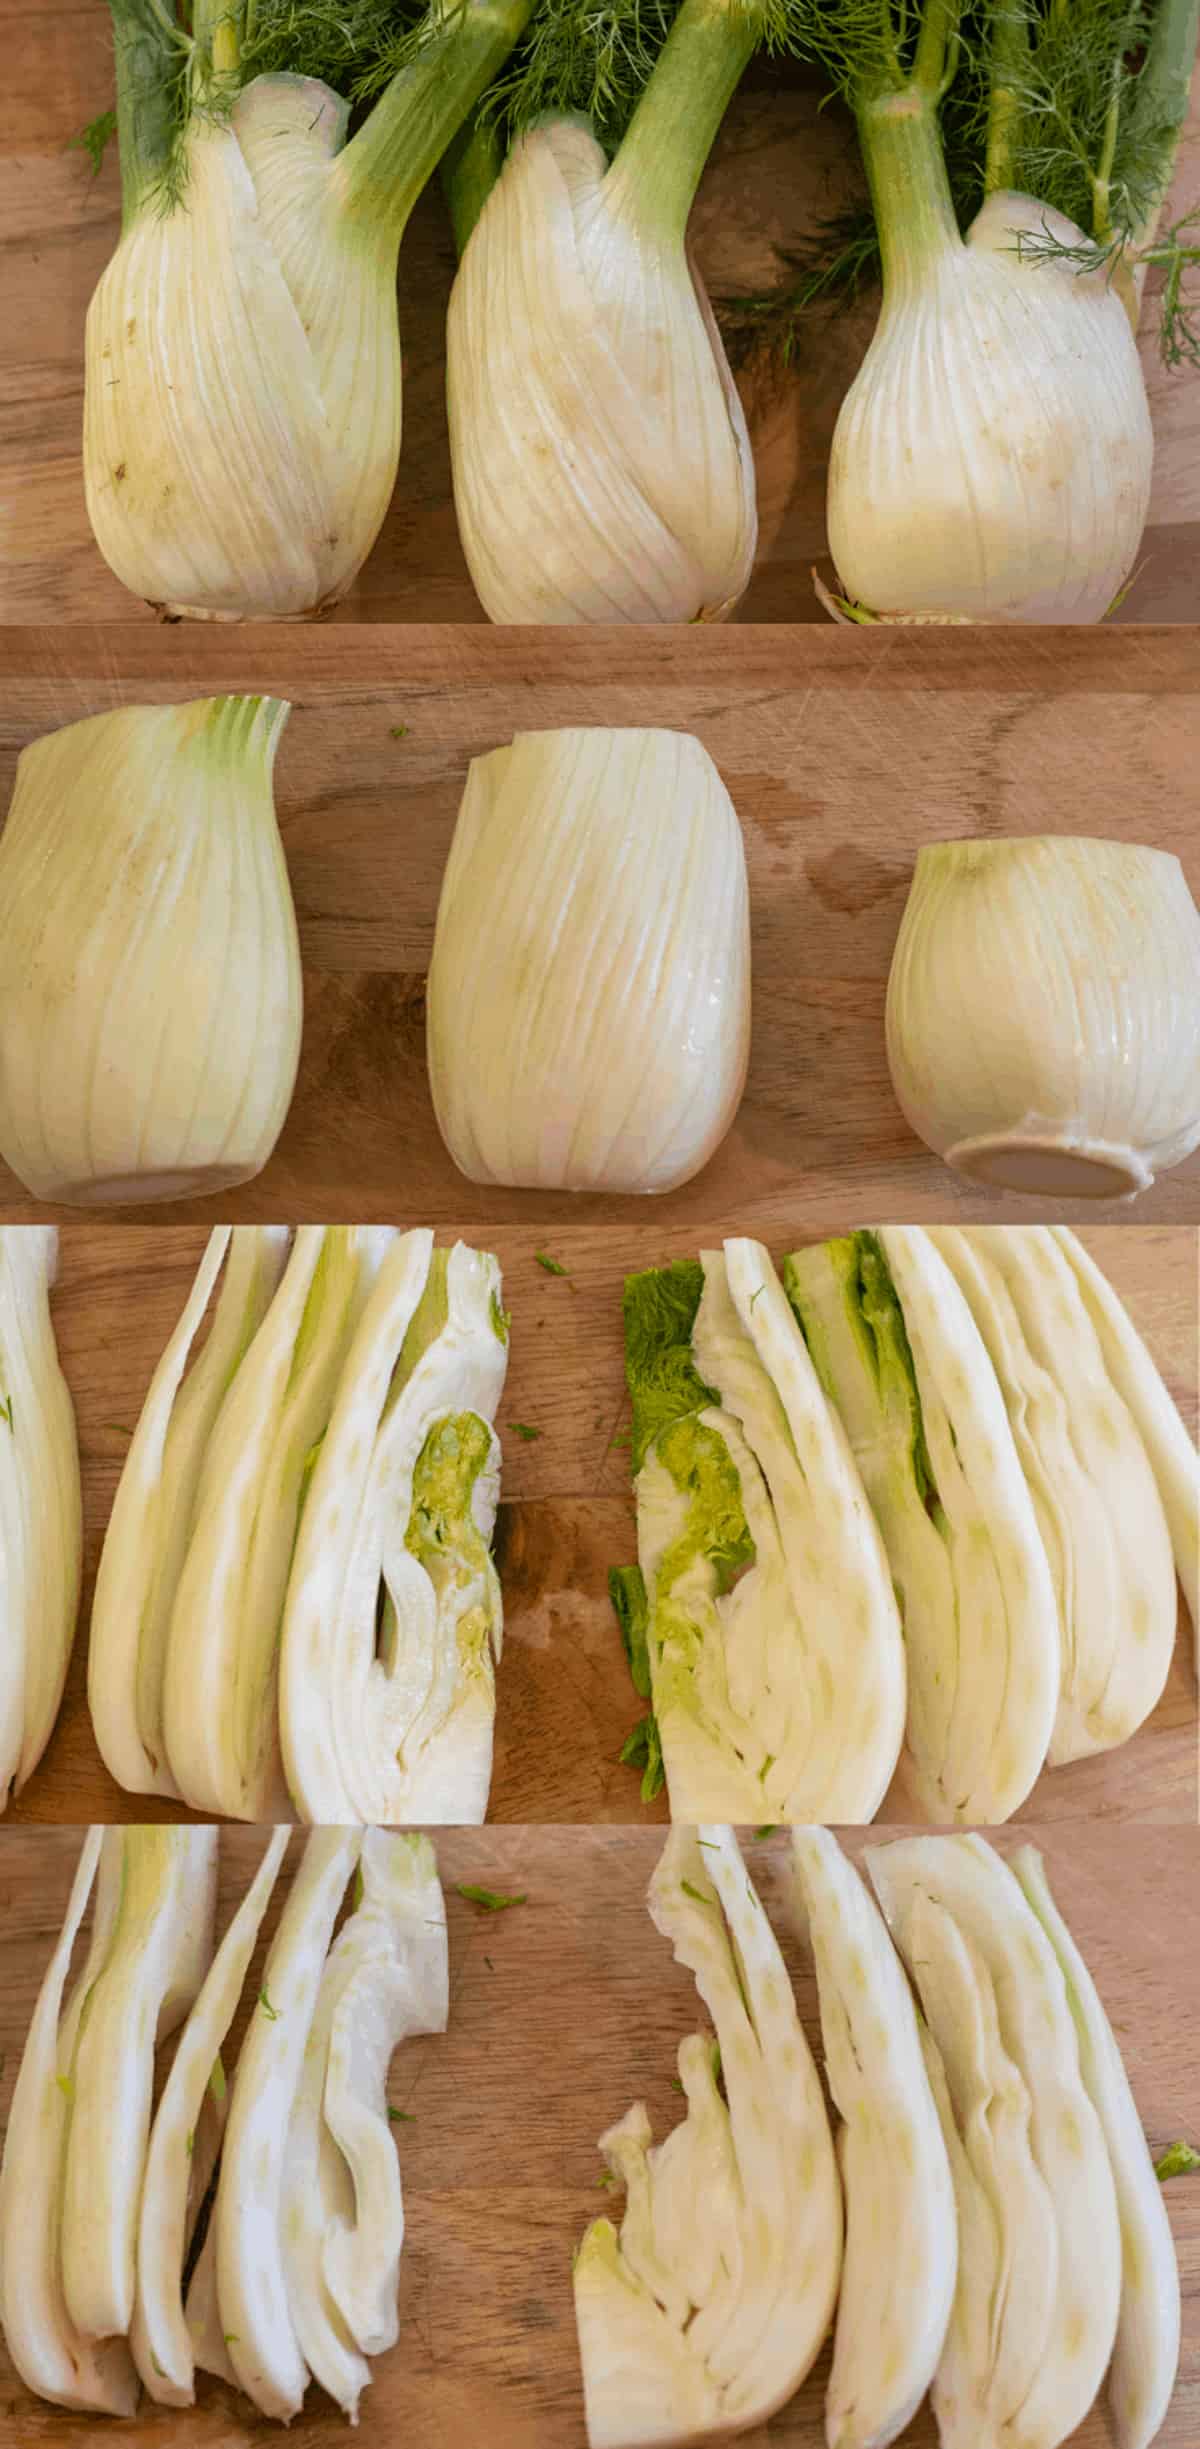 Process shots of how to cut a fennel bulb.